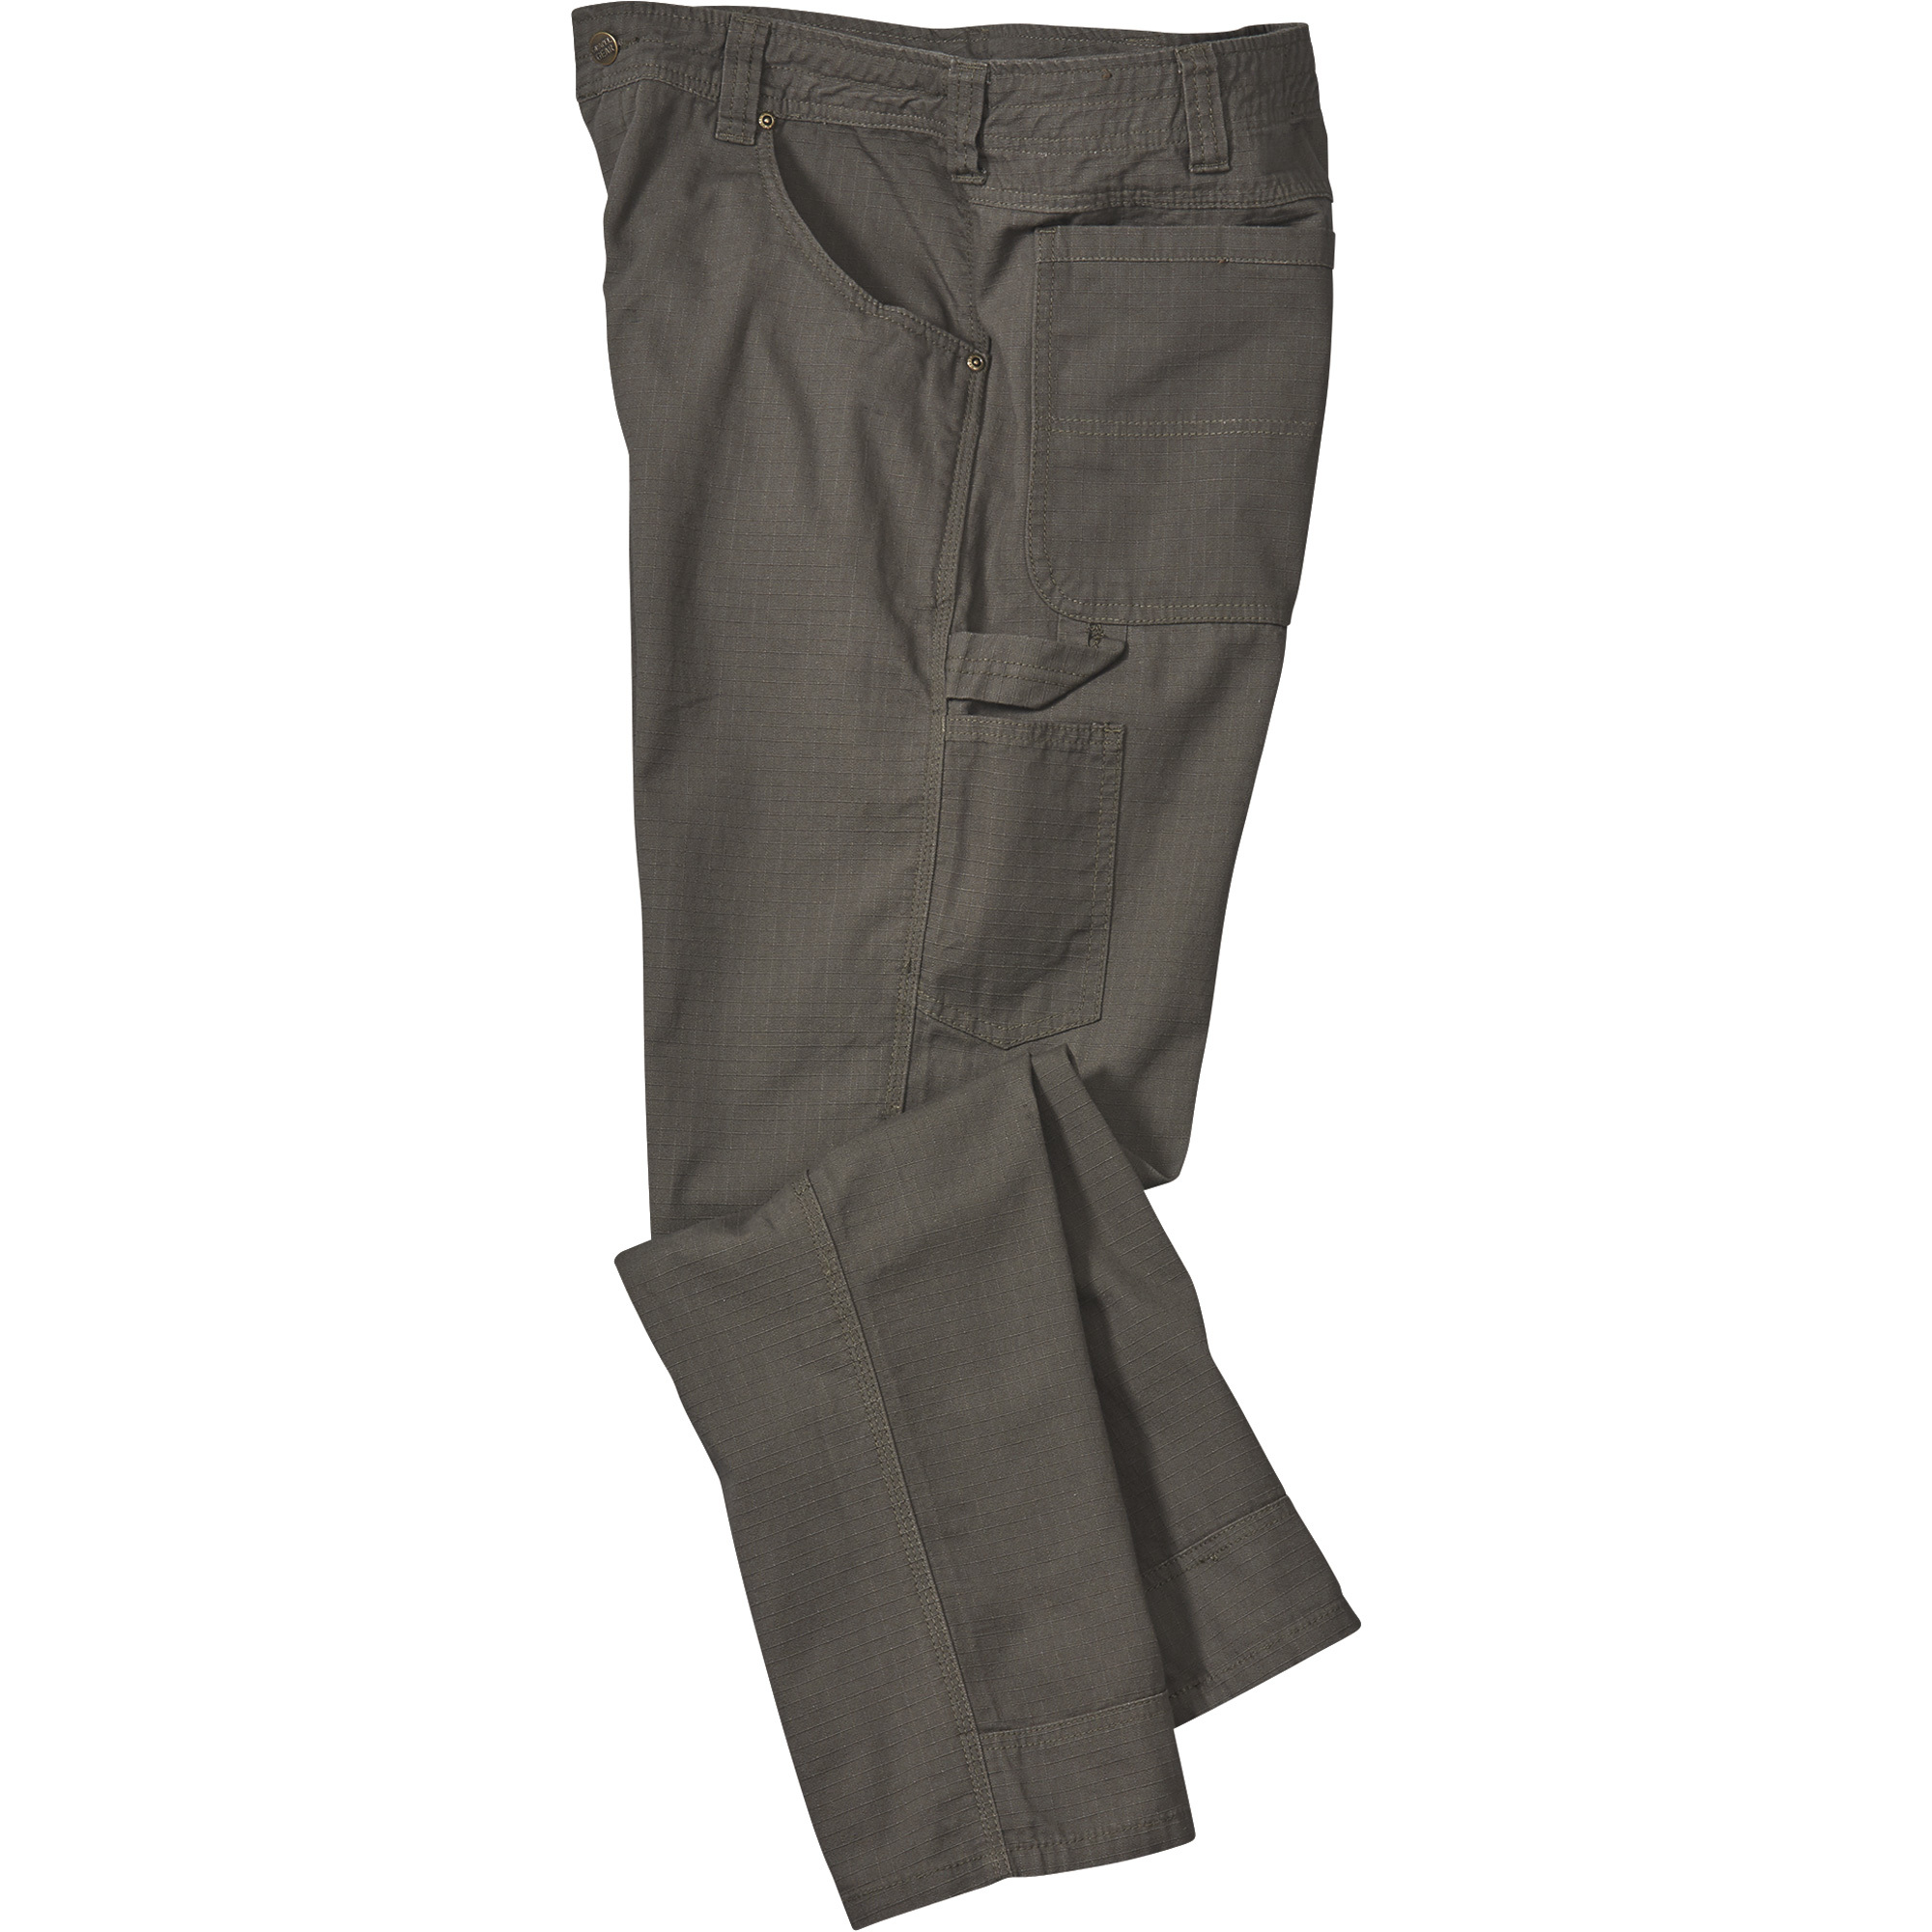 Gravel Gear Men's Cotton Ripstop Carpenter Pants with Teflon Fabric Protector â Moss, 42Inch Waist x 34Inch Inseam